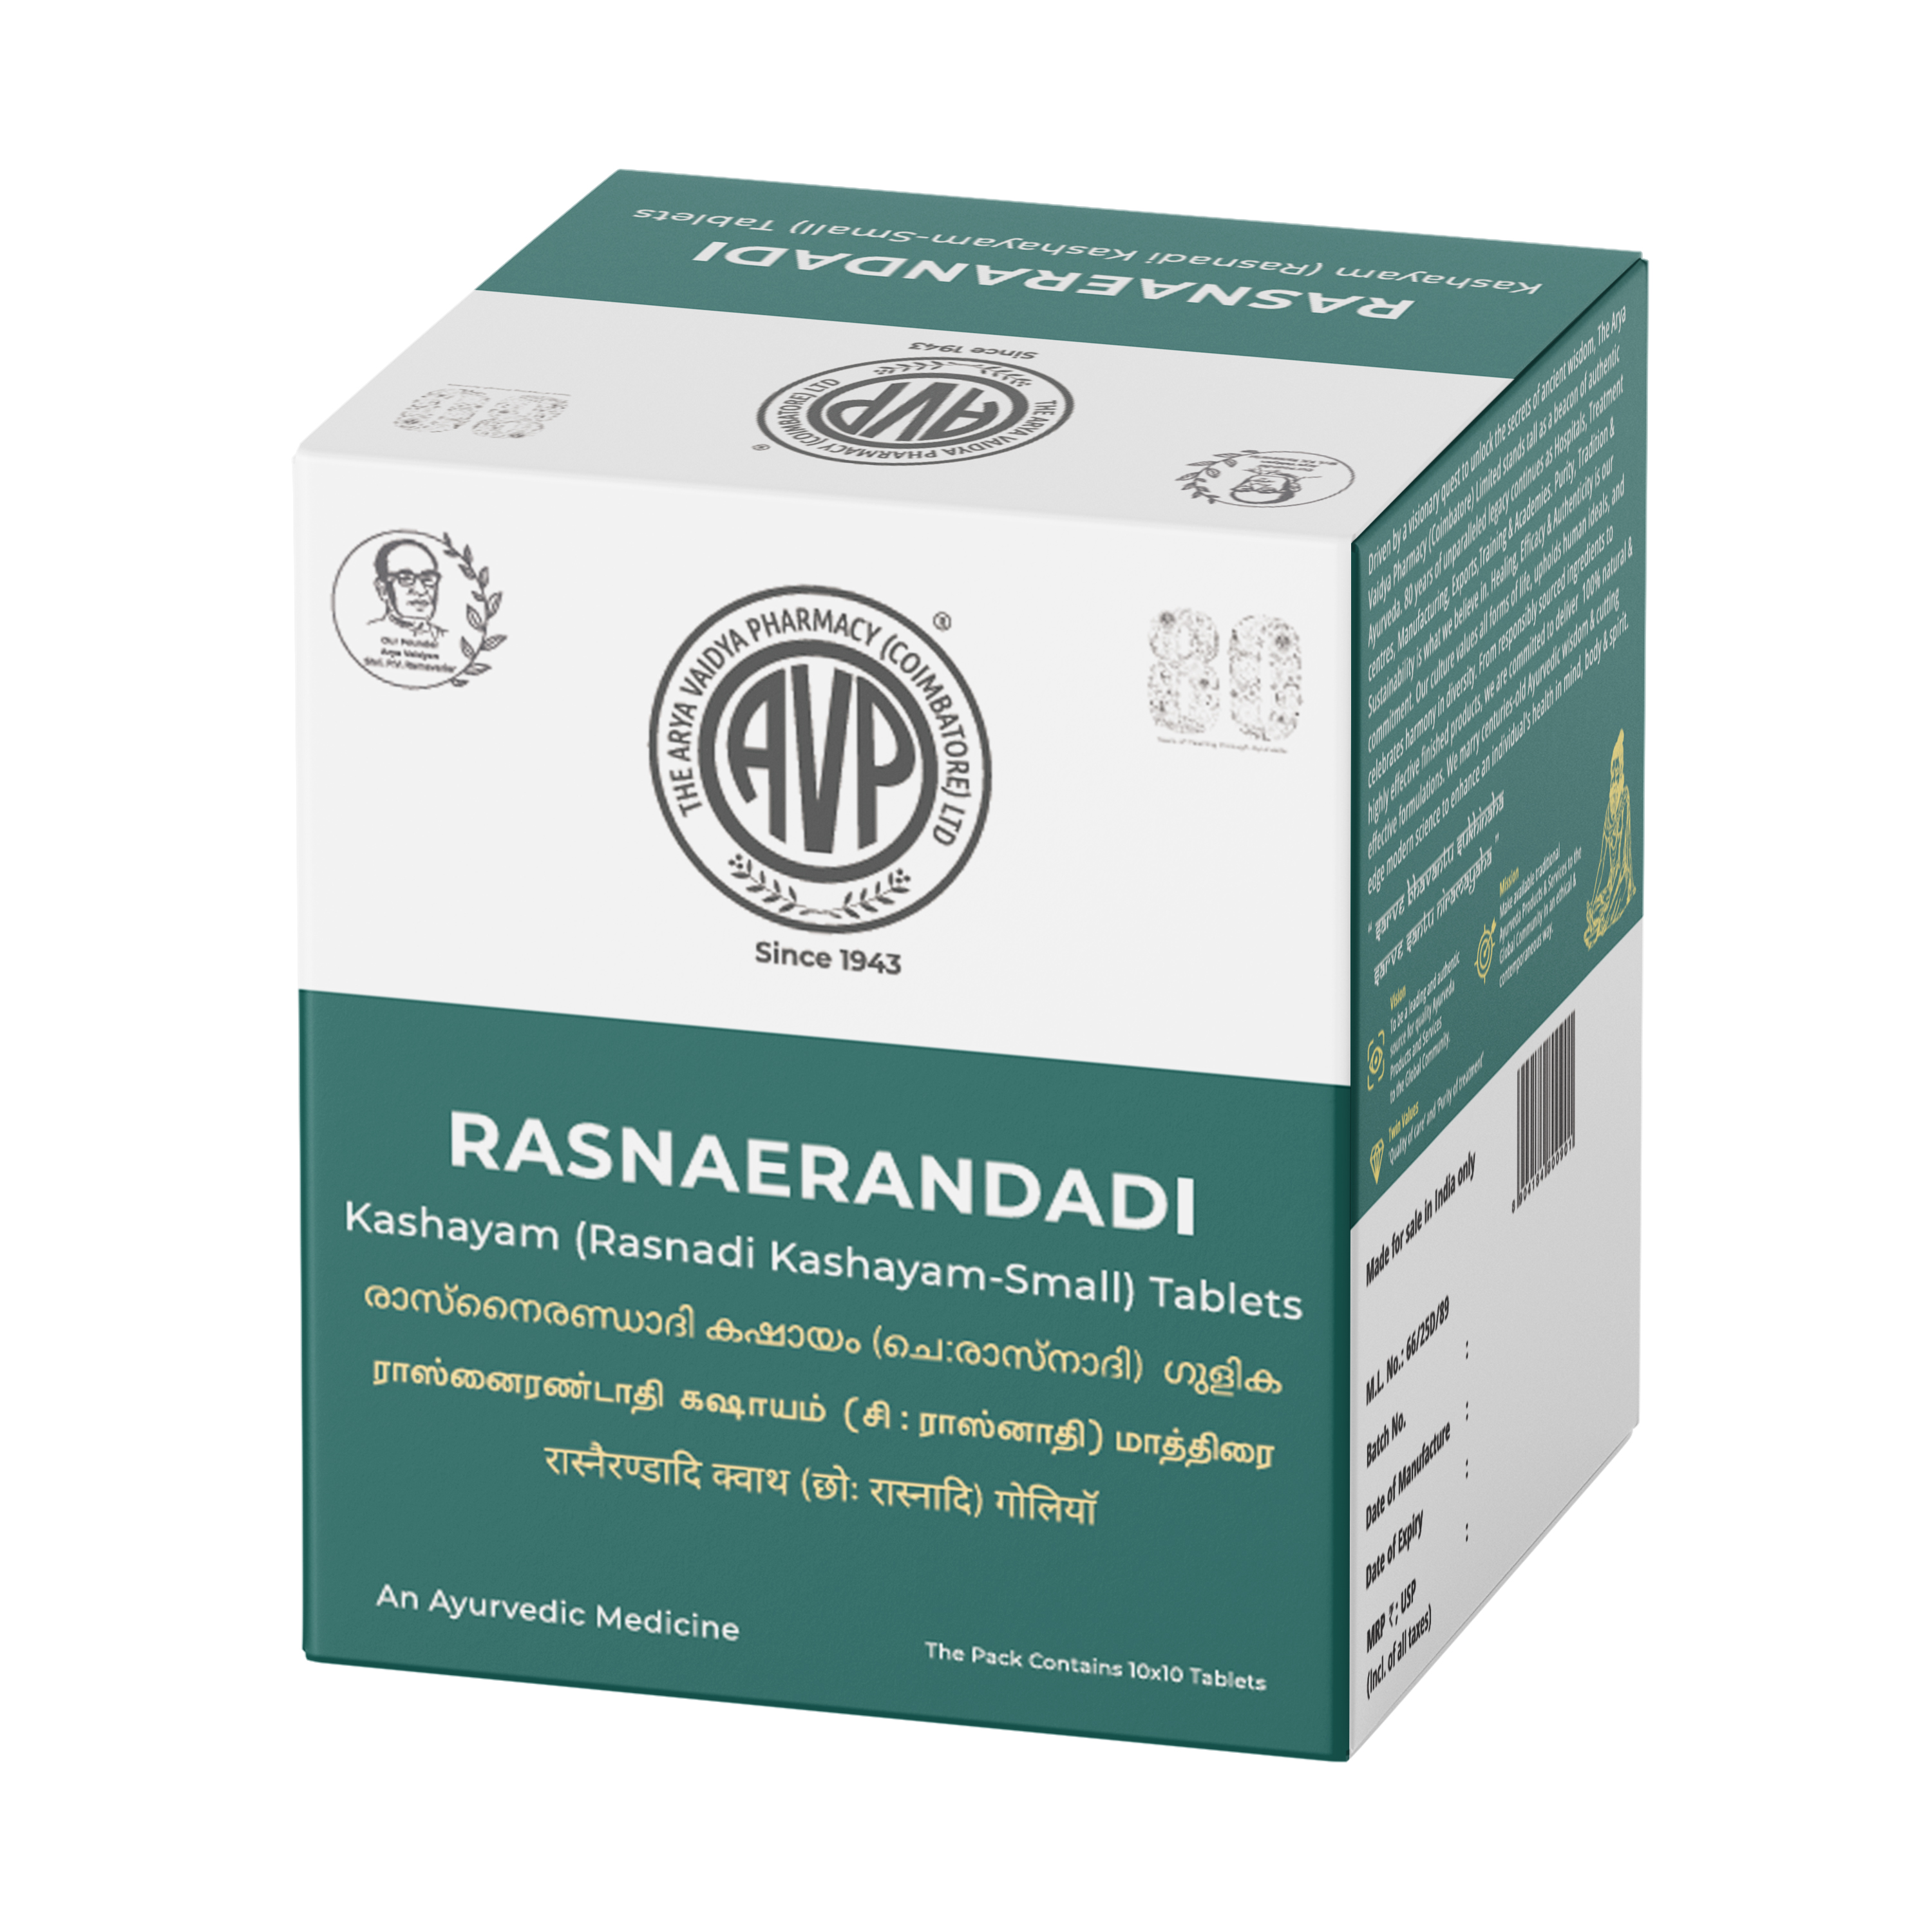 Rasnerandadi Kashayam Tablets | 100 Tablets Box